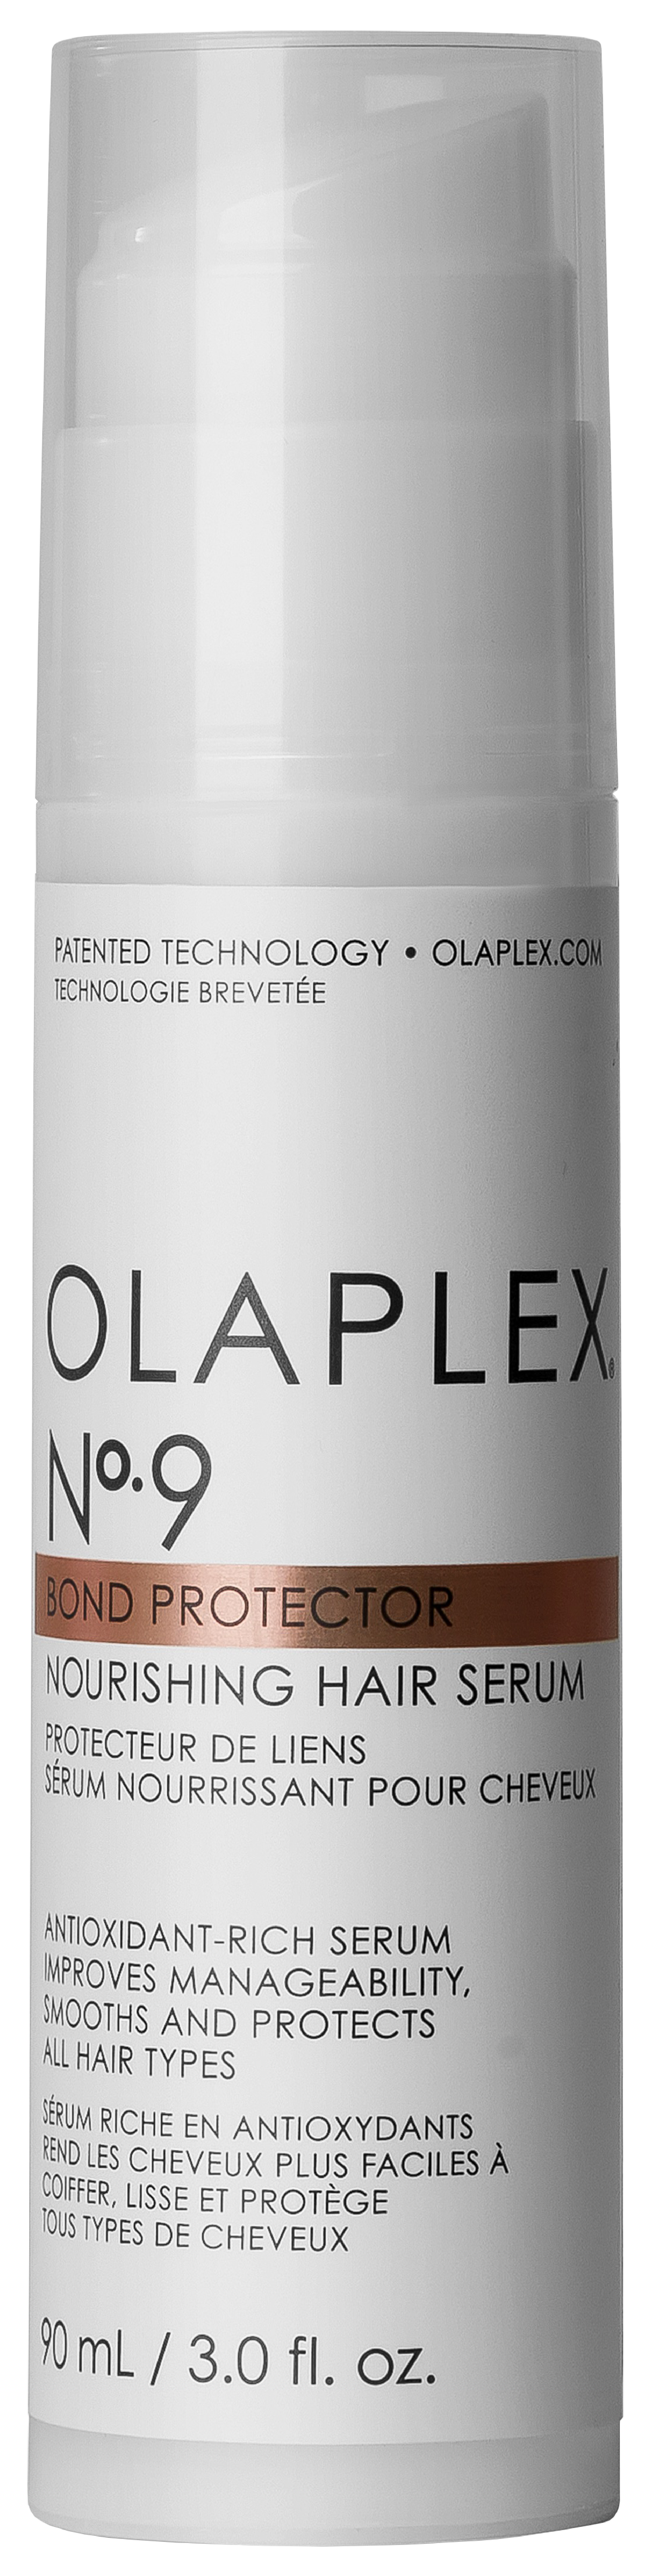 Olaplex No. 9 Bond Protector Nourishing Hair Serum, 90 ml